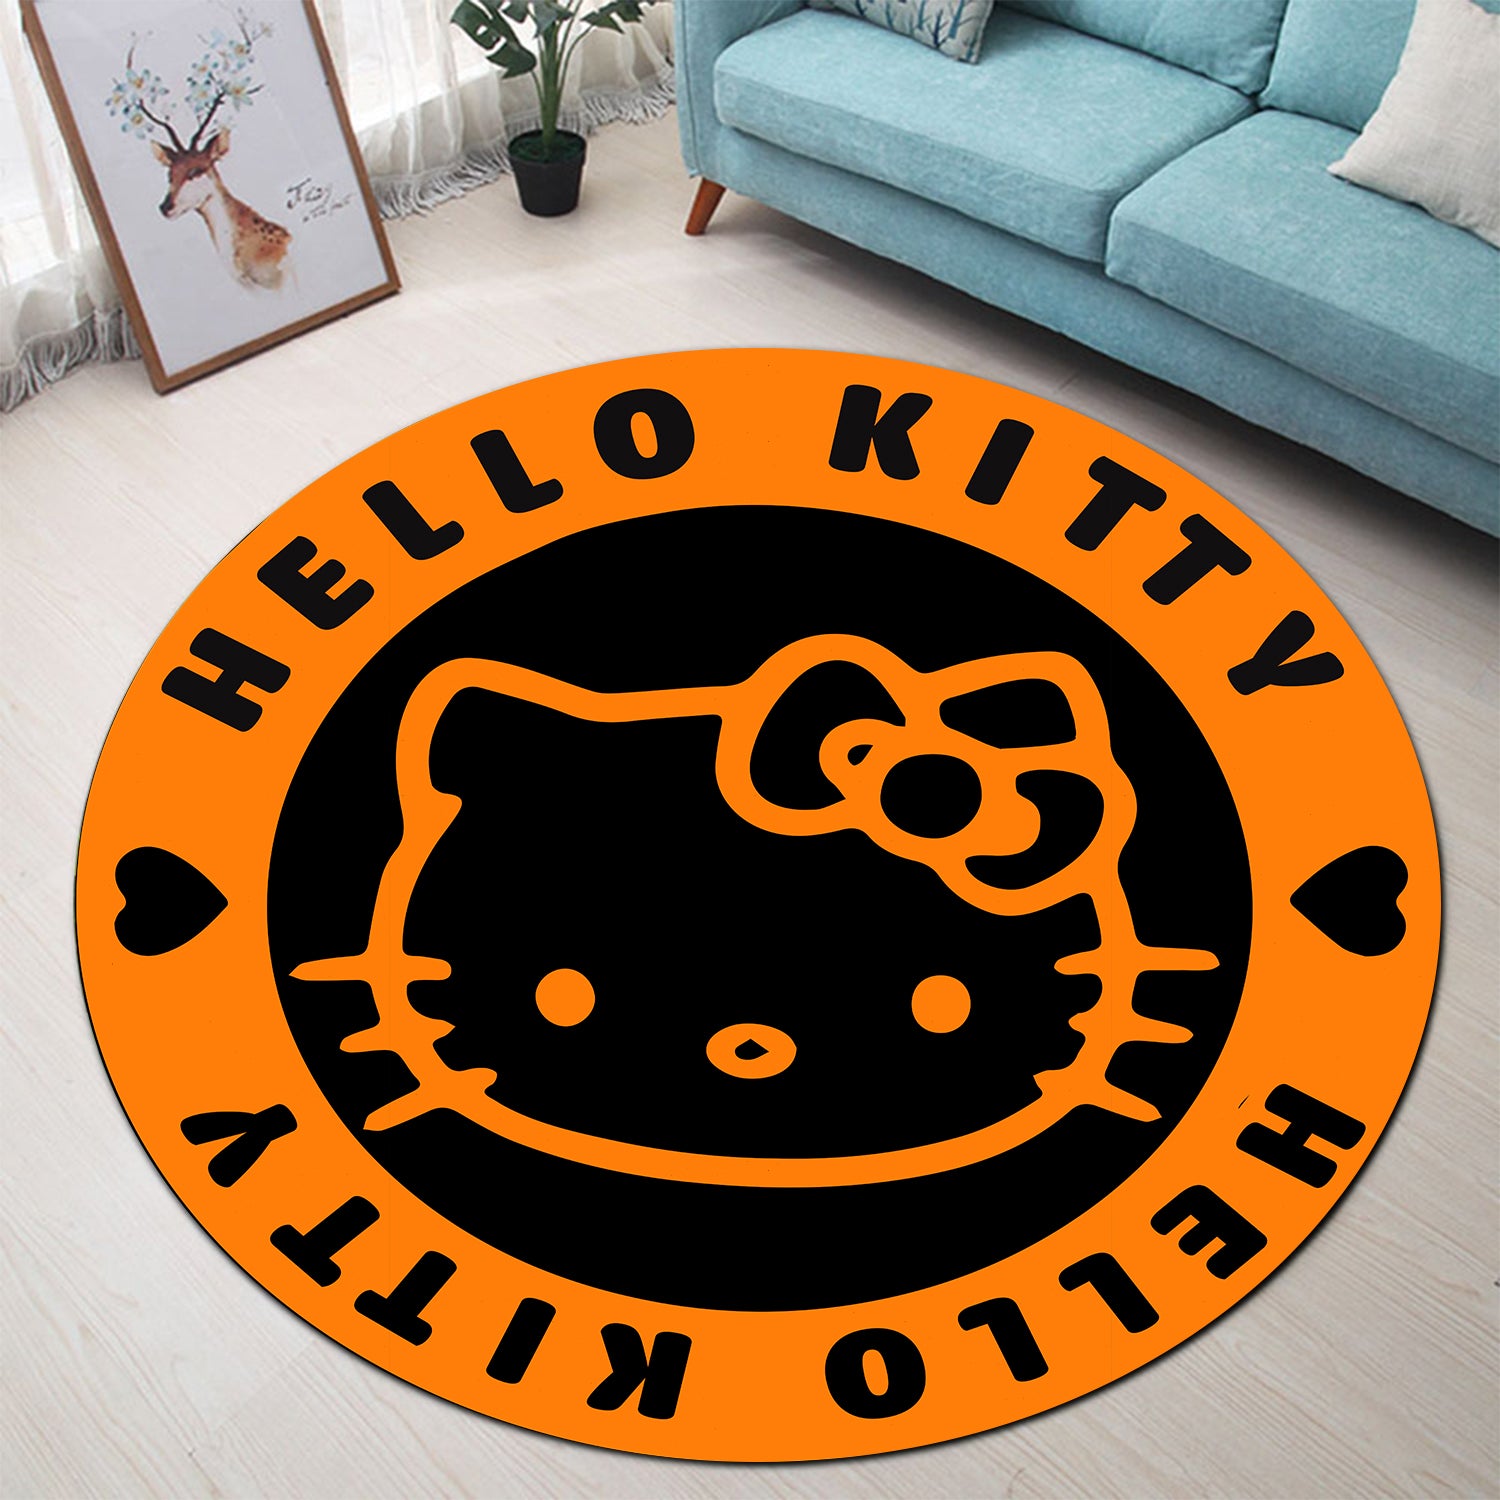 Hello Kitty Orange Round Carpet Rug Bedroom Livingroom Home Decor Nearkii